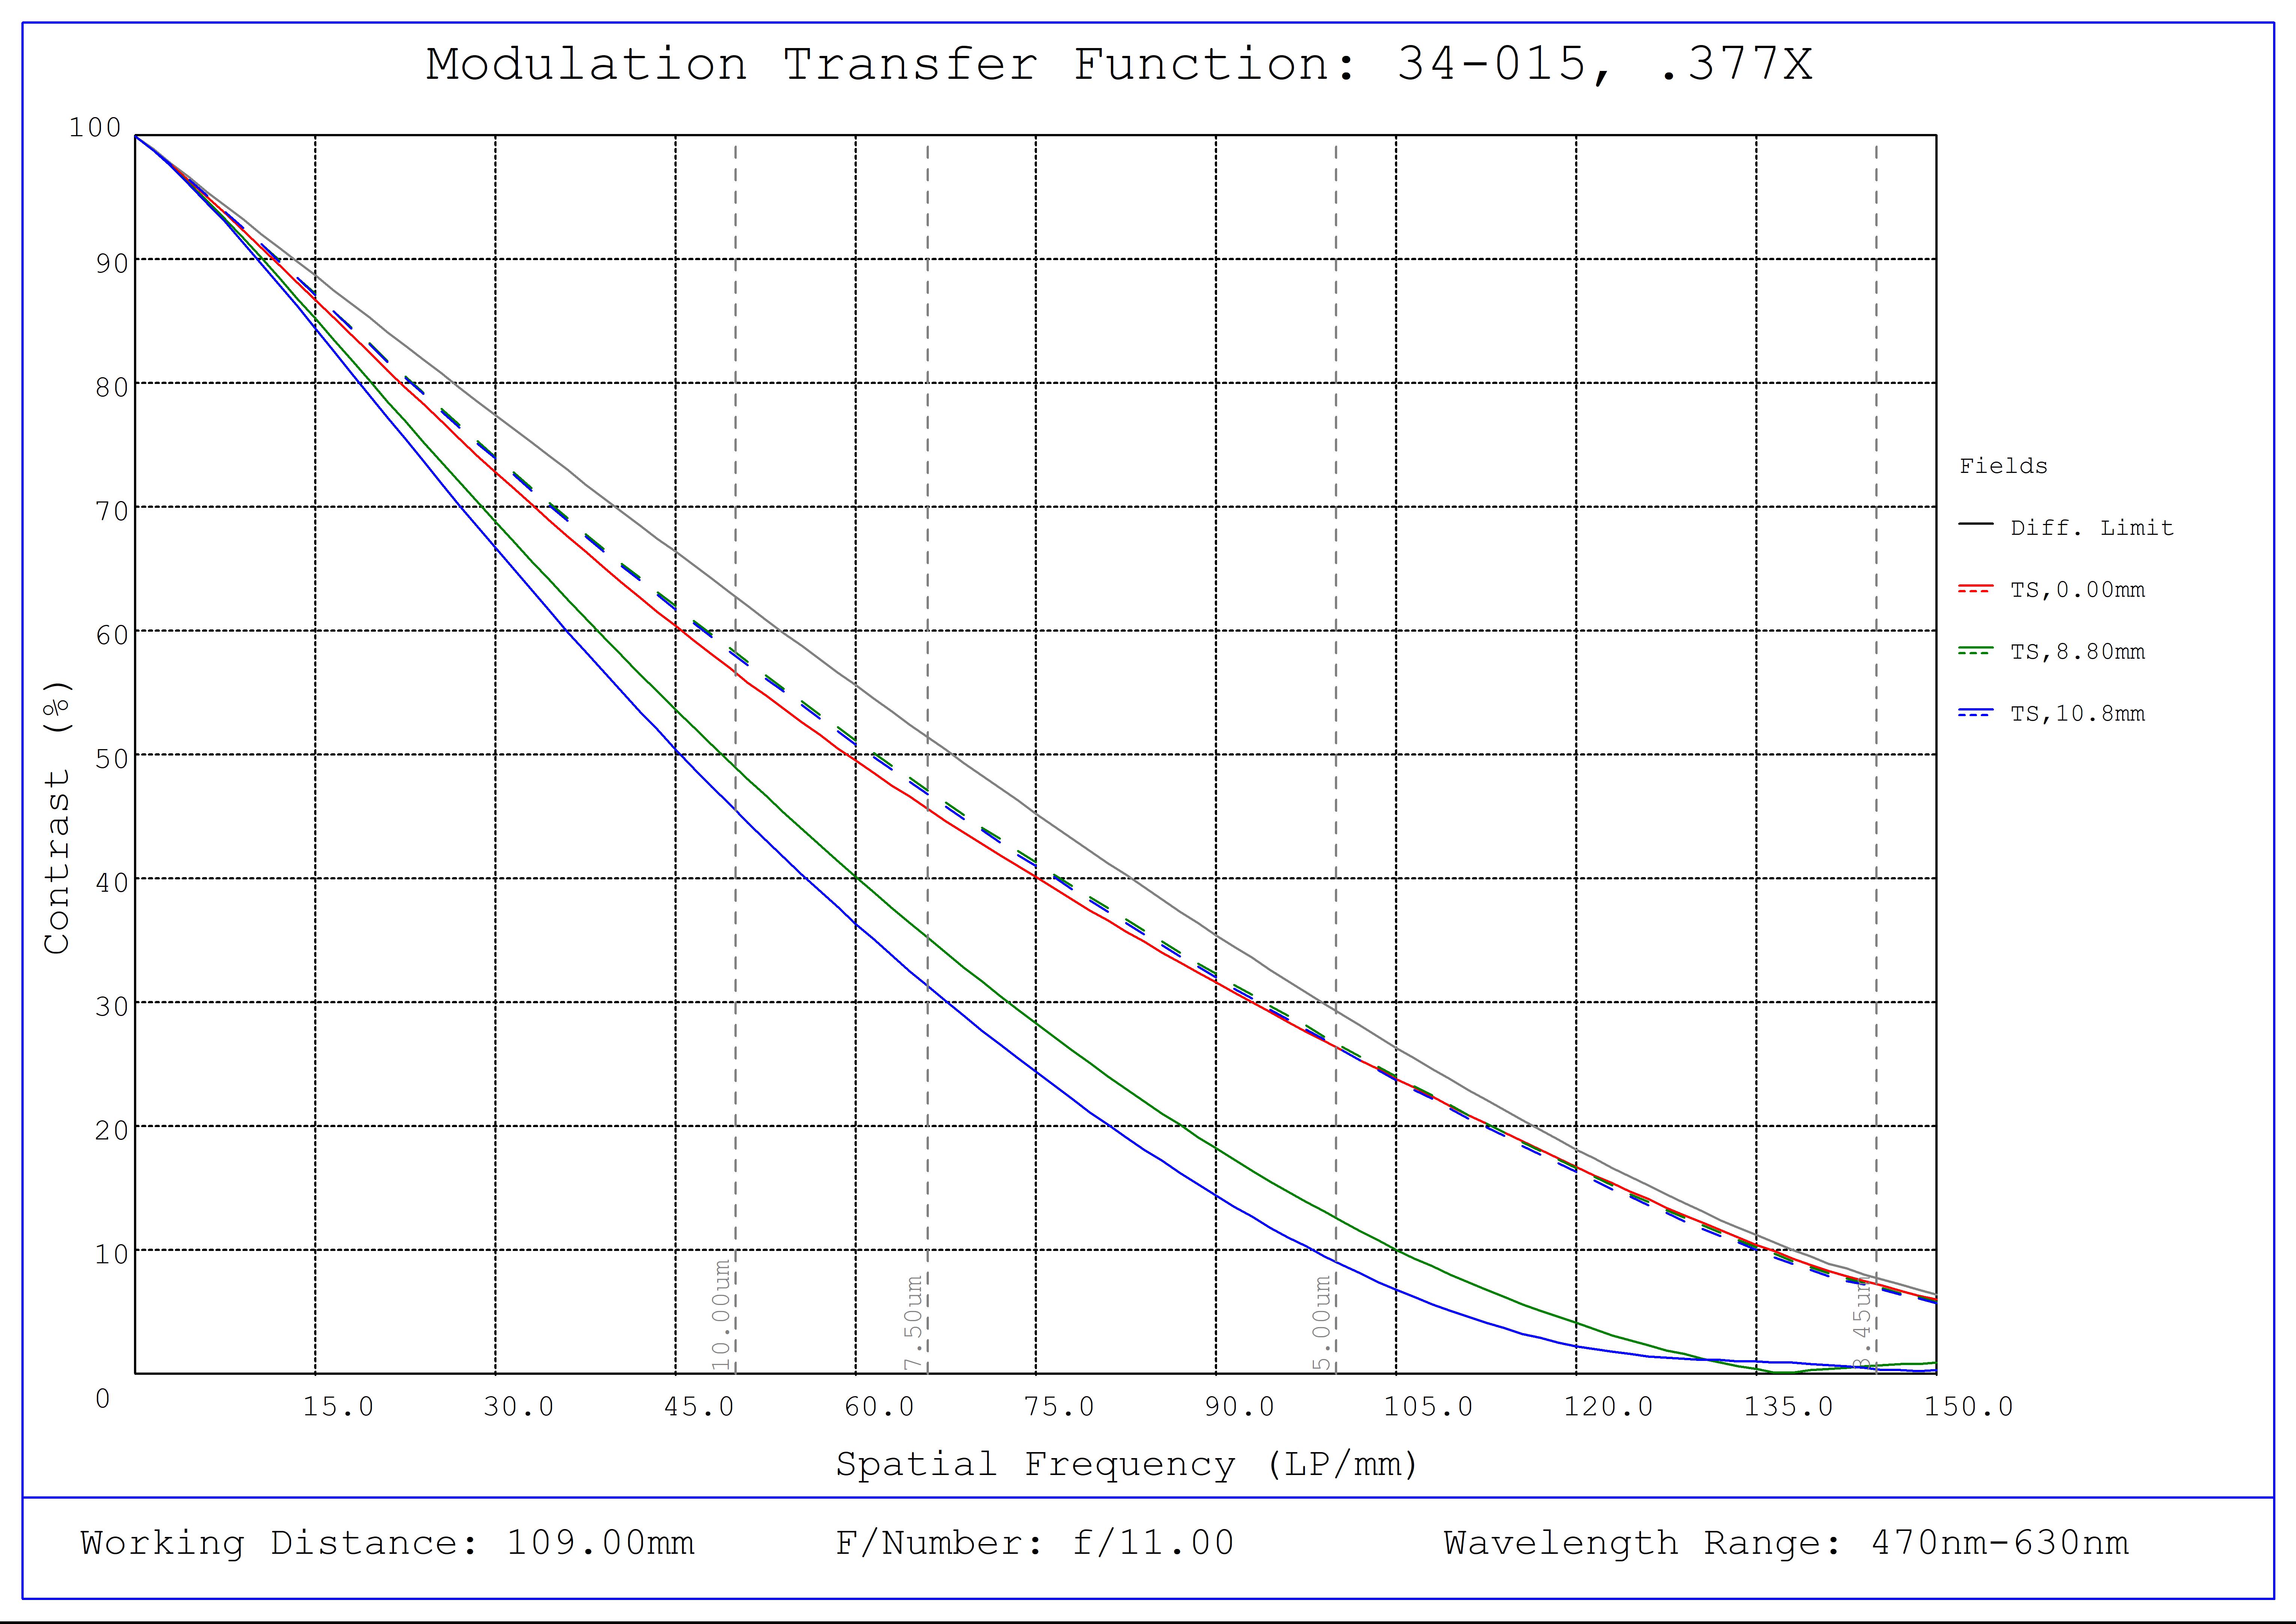 #34-015, 0.377X, 4/3" C-Mount TitanTL® Telecentric Lens, Modulated Transfer Function (MTF) Plot, 109mm Working Distance, f11